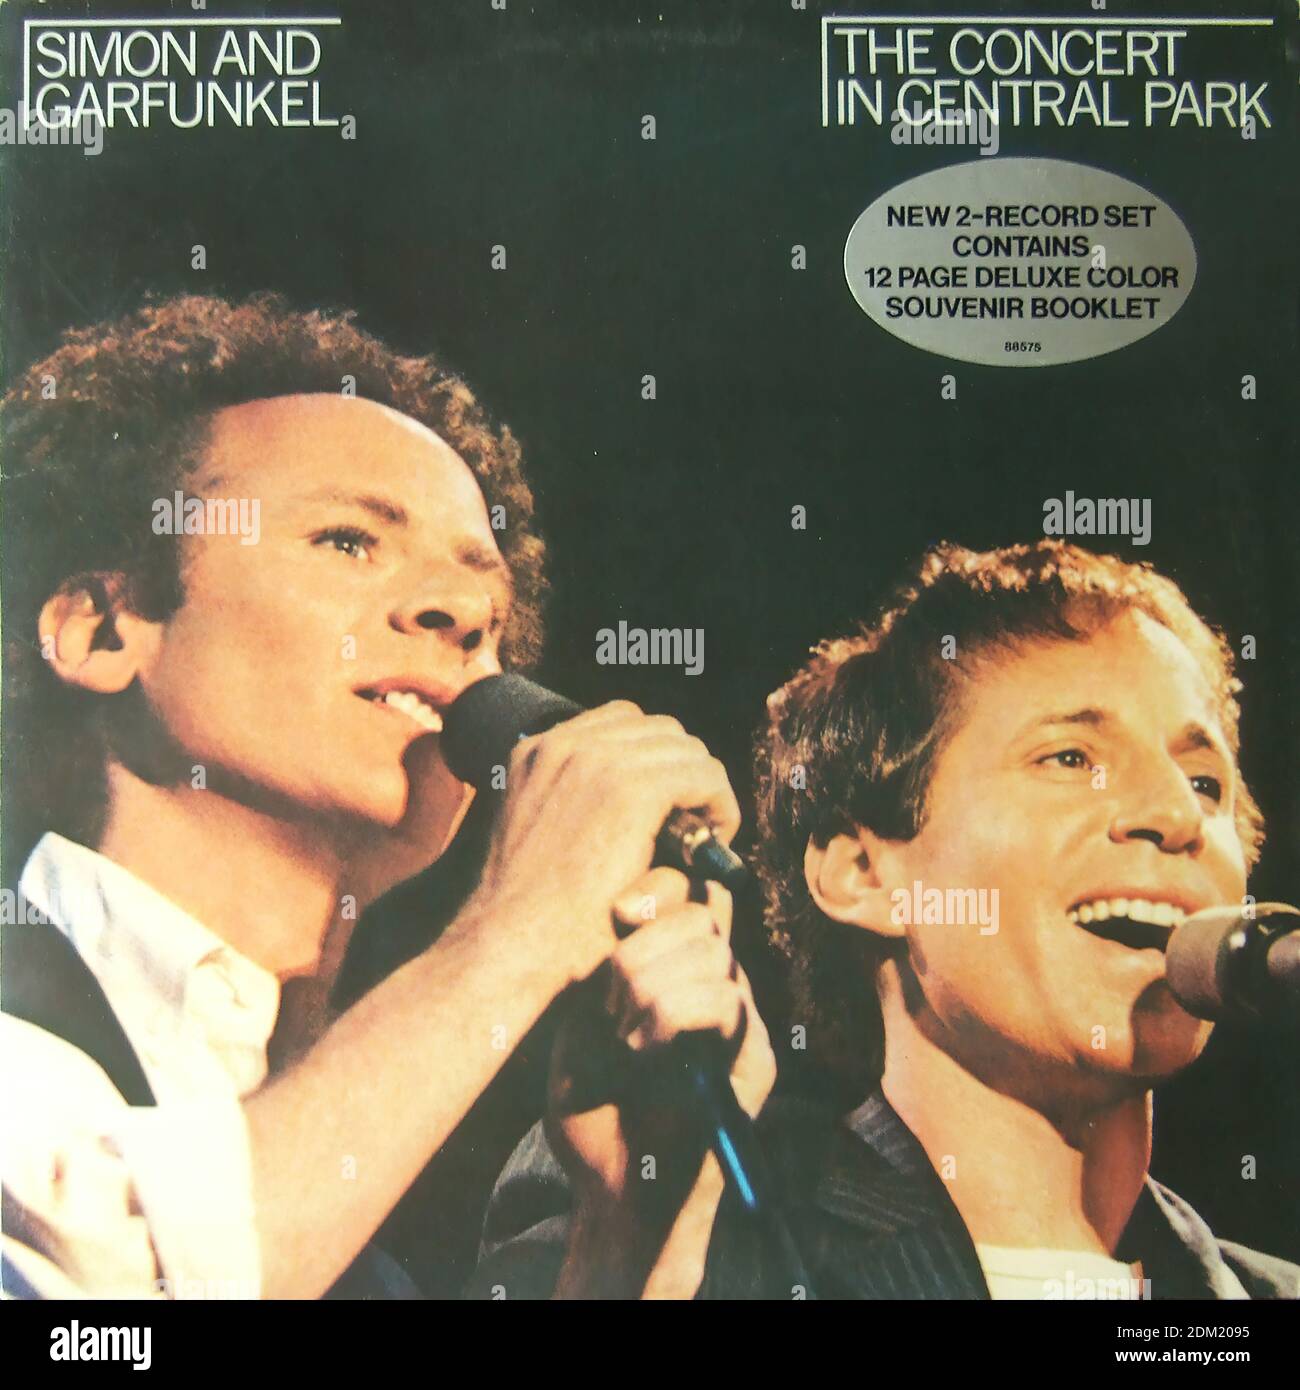 Simon & Garfunkel - The Concert in Central Park, New 2-Record set contains  12 page Deluxe color souvenir booklet - Vintage vinyl album cover Stock  Photo - Alamy